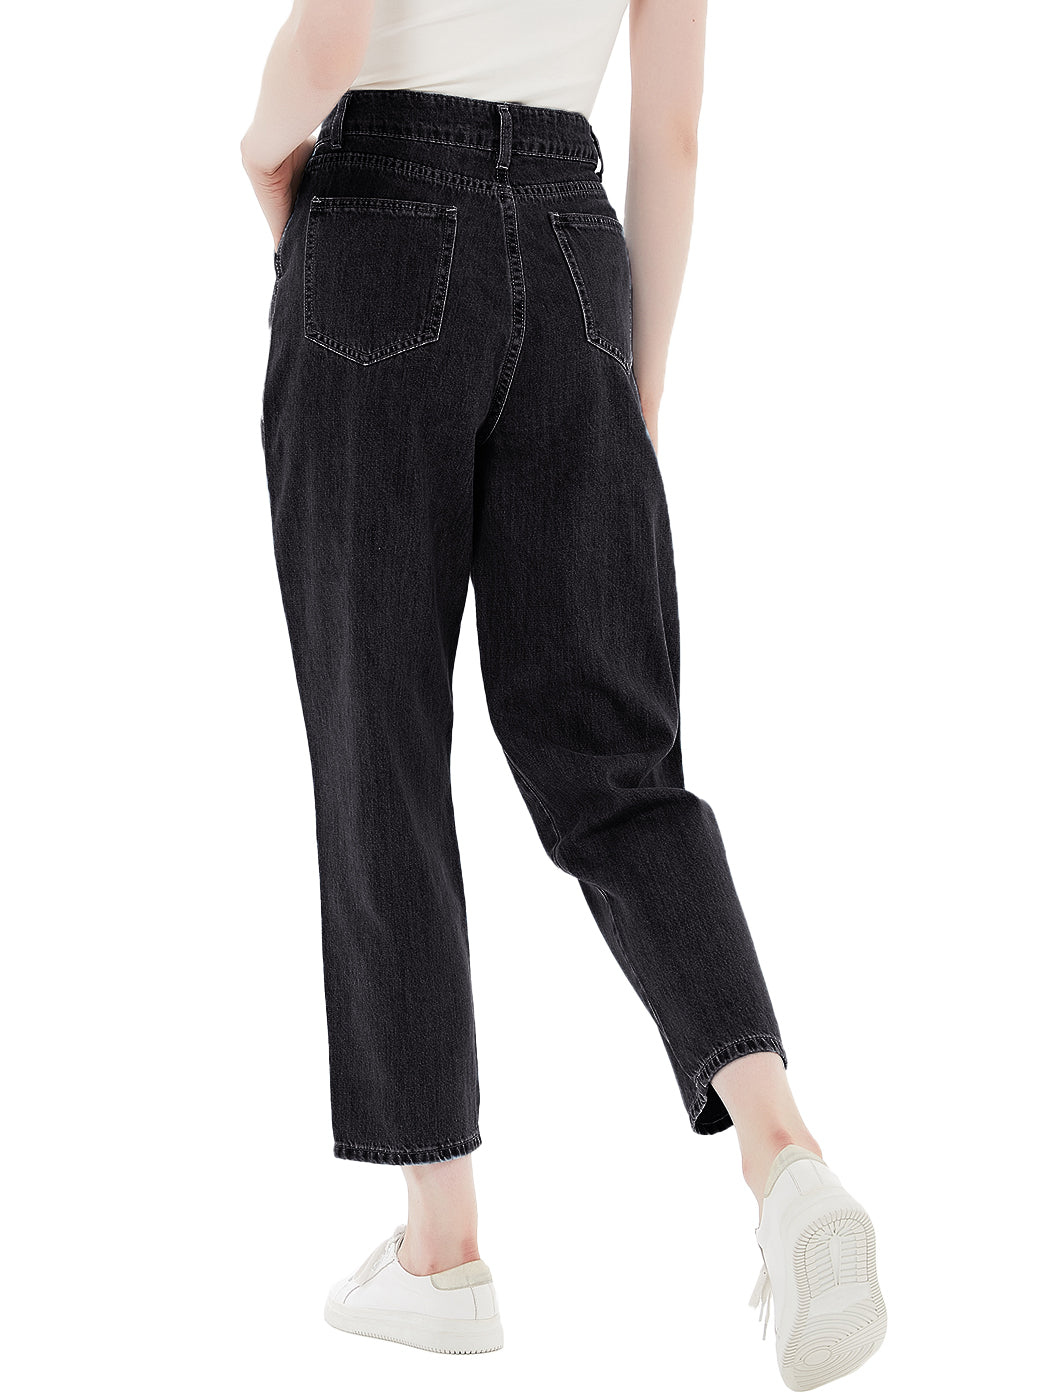 Anna-Kaci Women's High Waisted Boyfriend Denim Jeans Loose Tapered Crop Pants, Black, Large